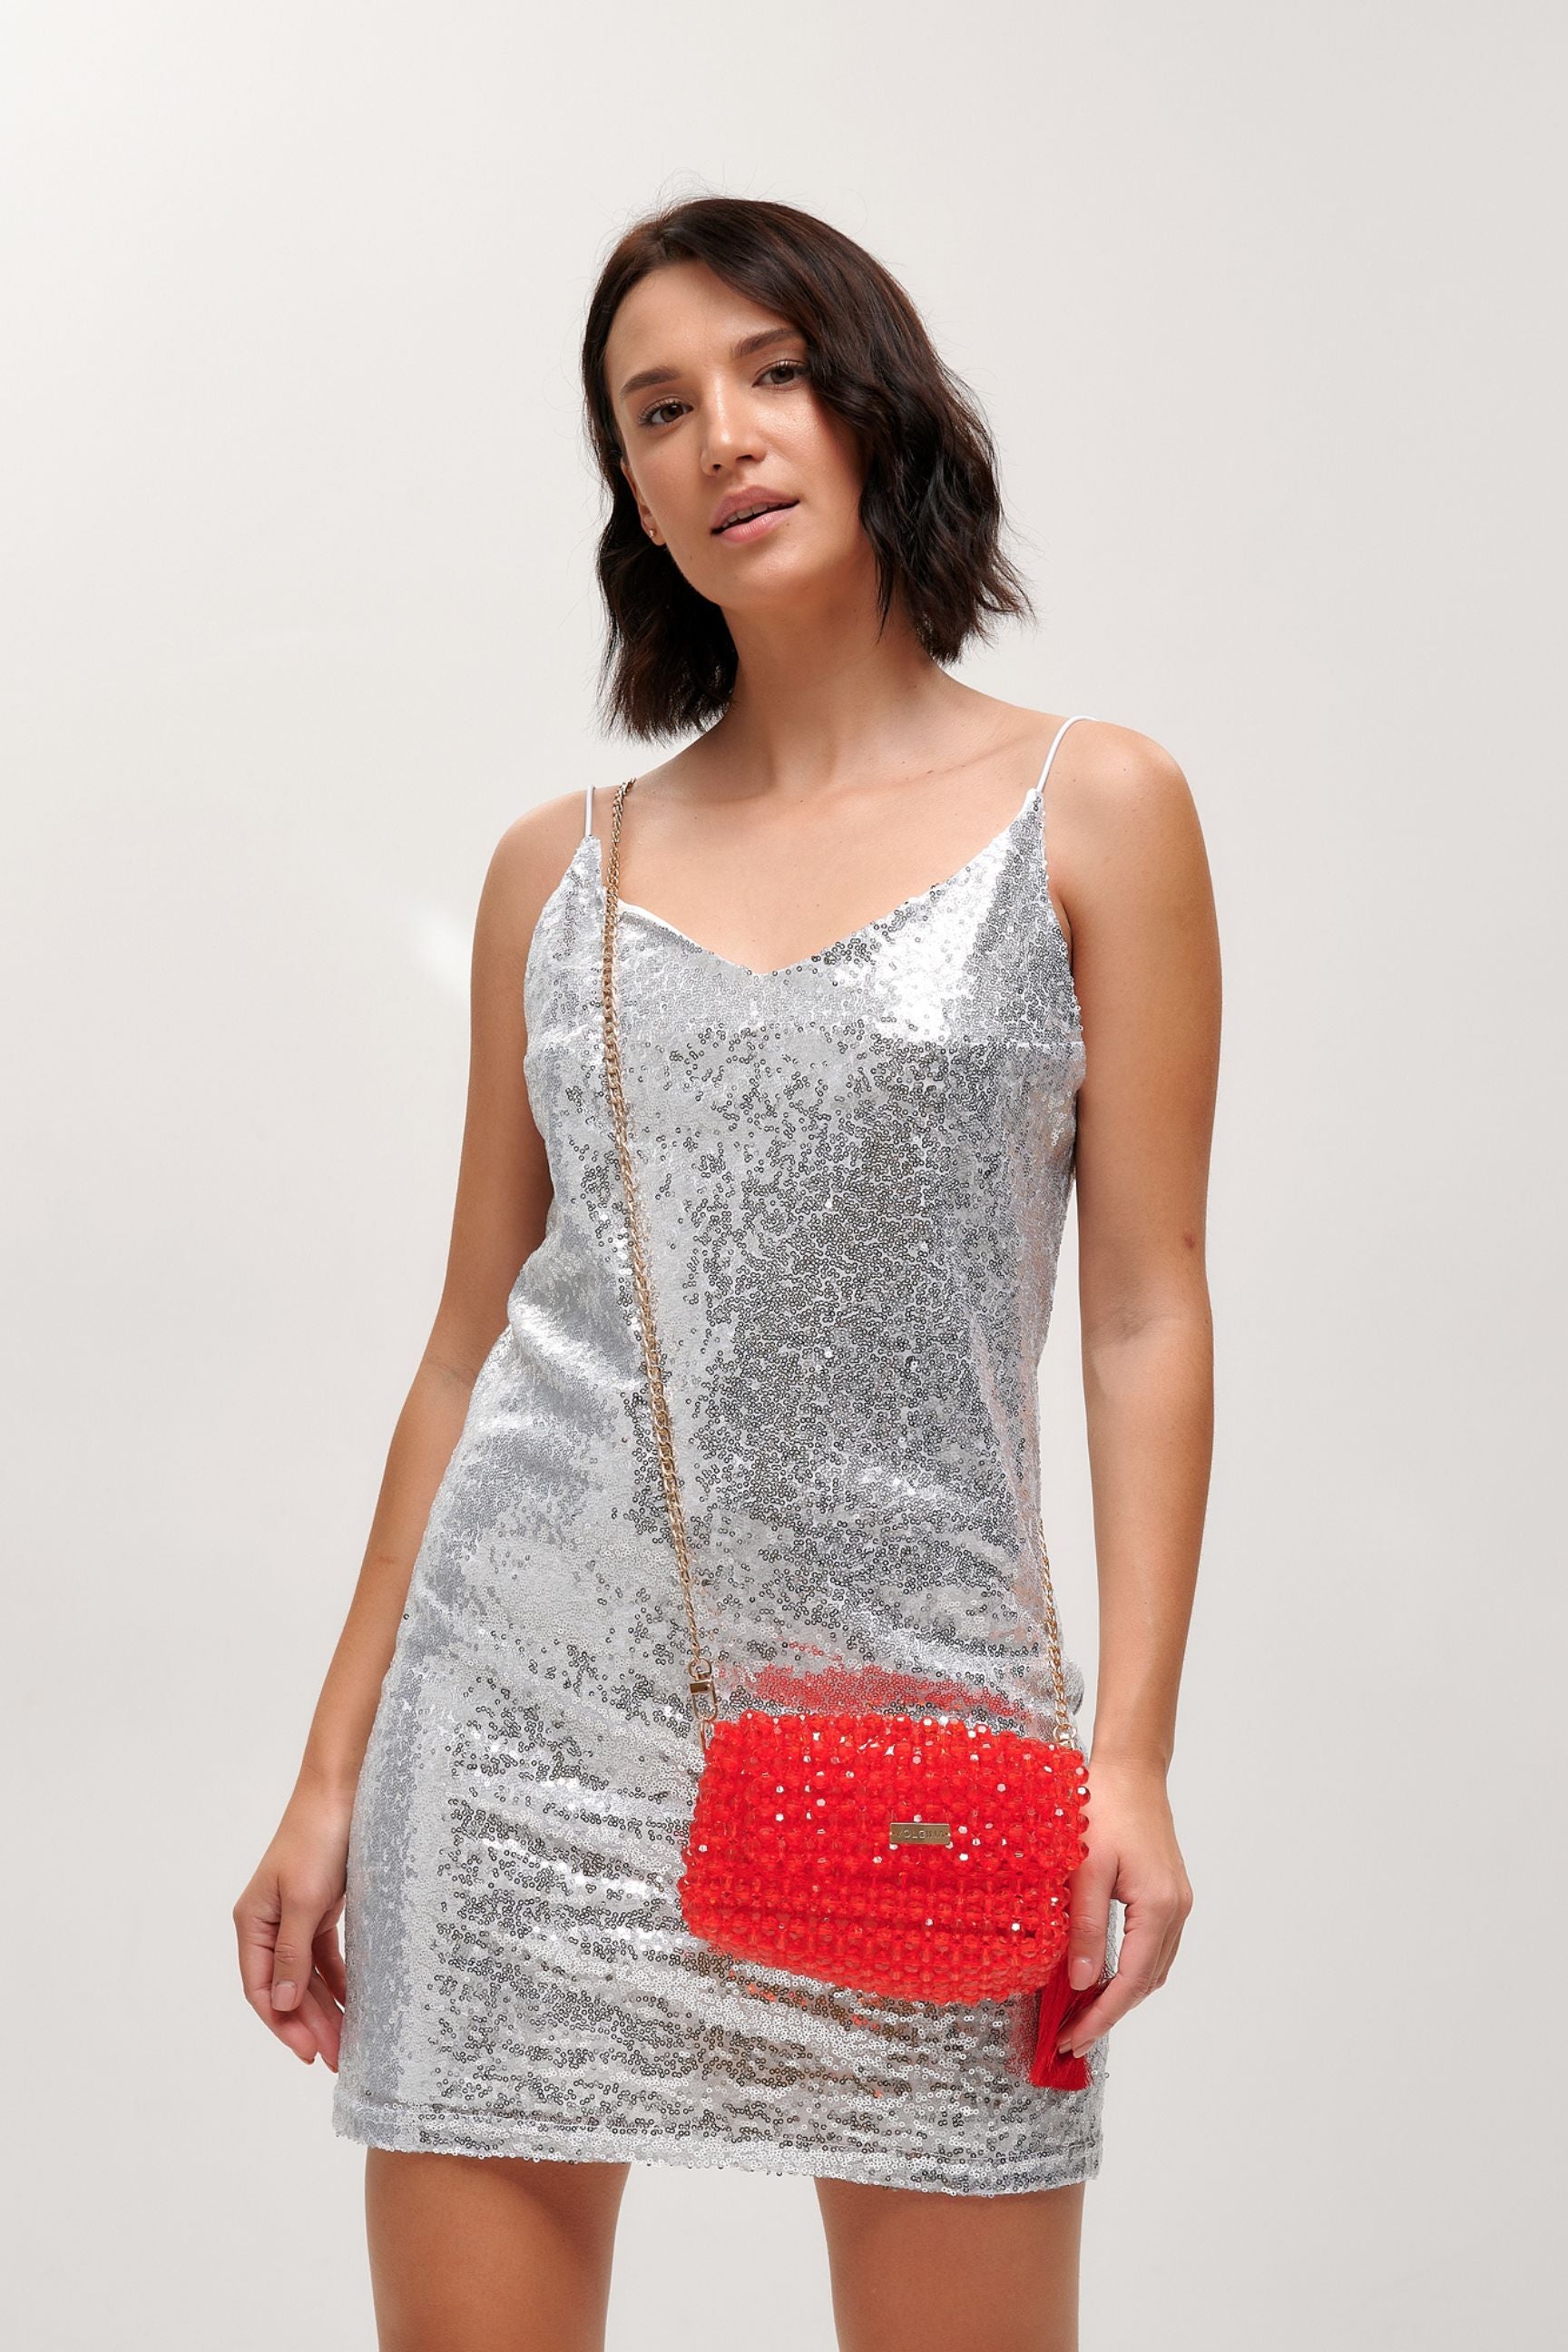 Red Clutch Bag Purse with Swarovski Acrylic Beads, Handmade